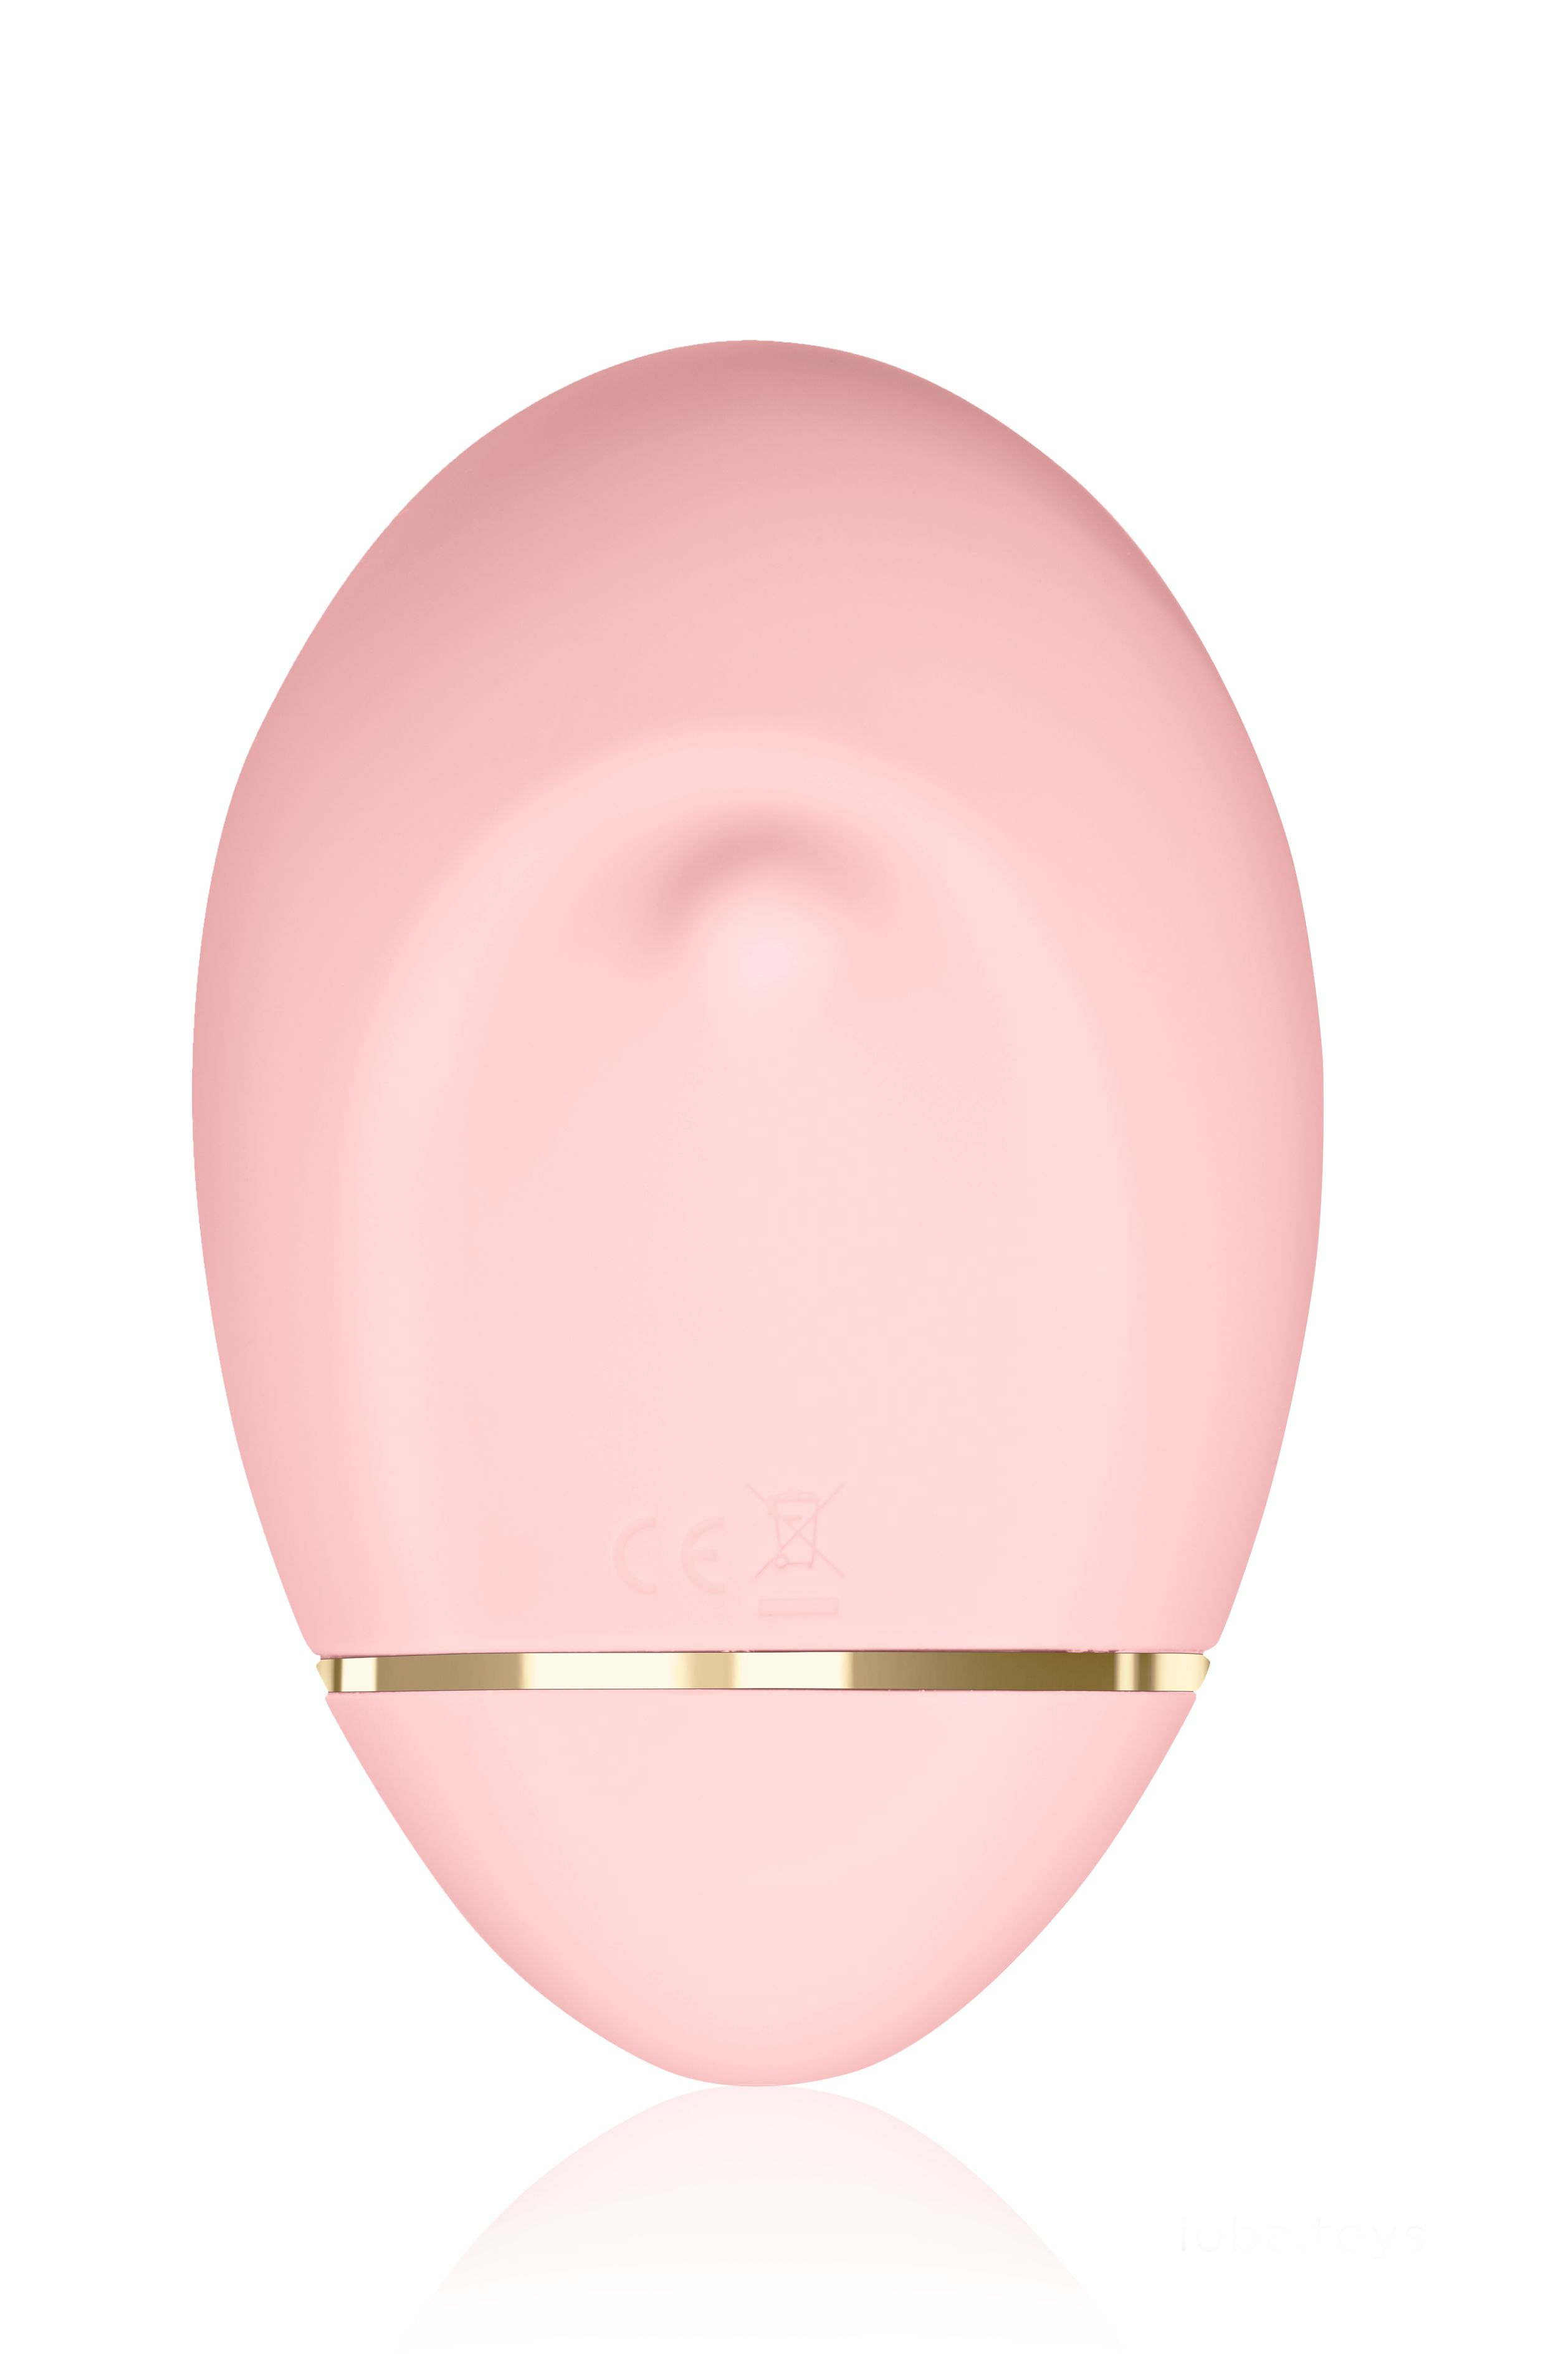 TOYS OhMyC Clitoris - Roze 1 auflegevibratoren IOBA Stimulator